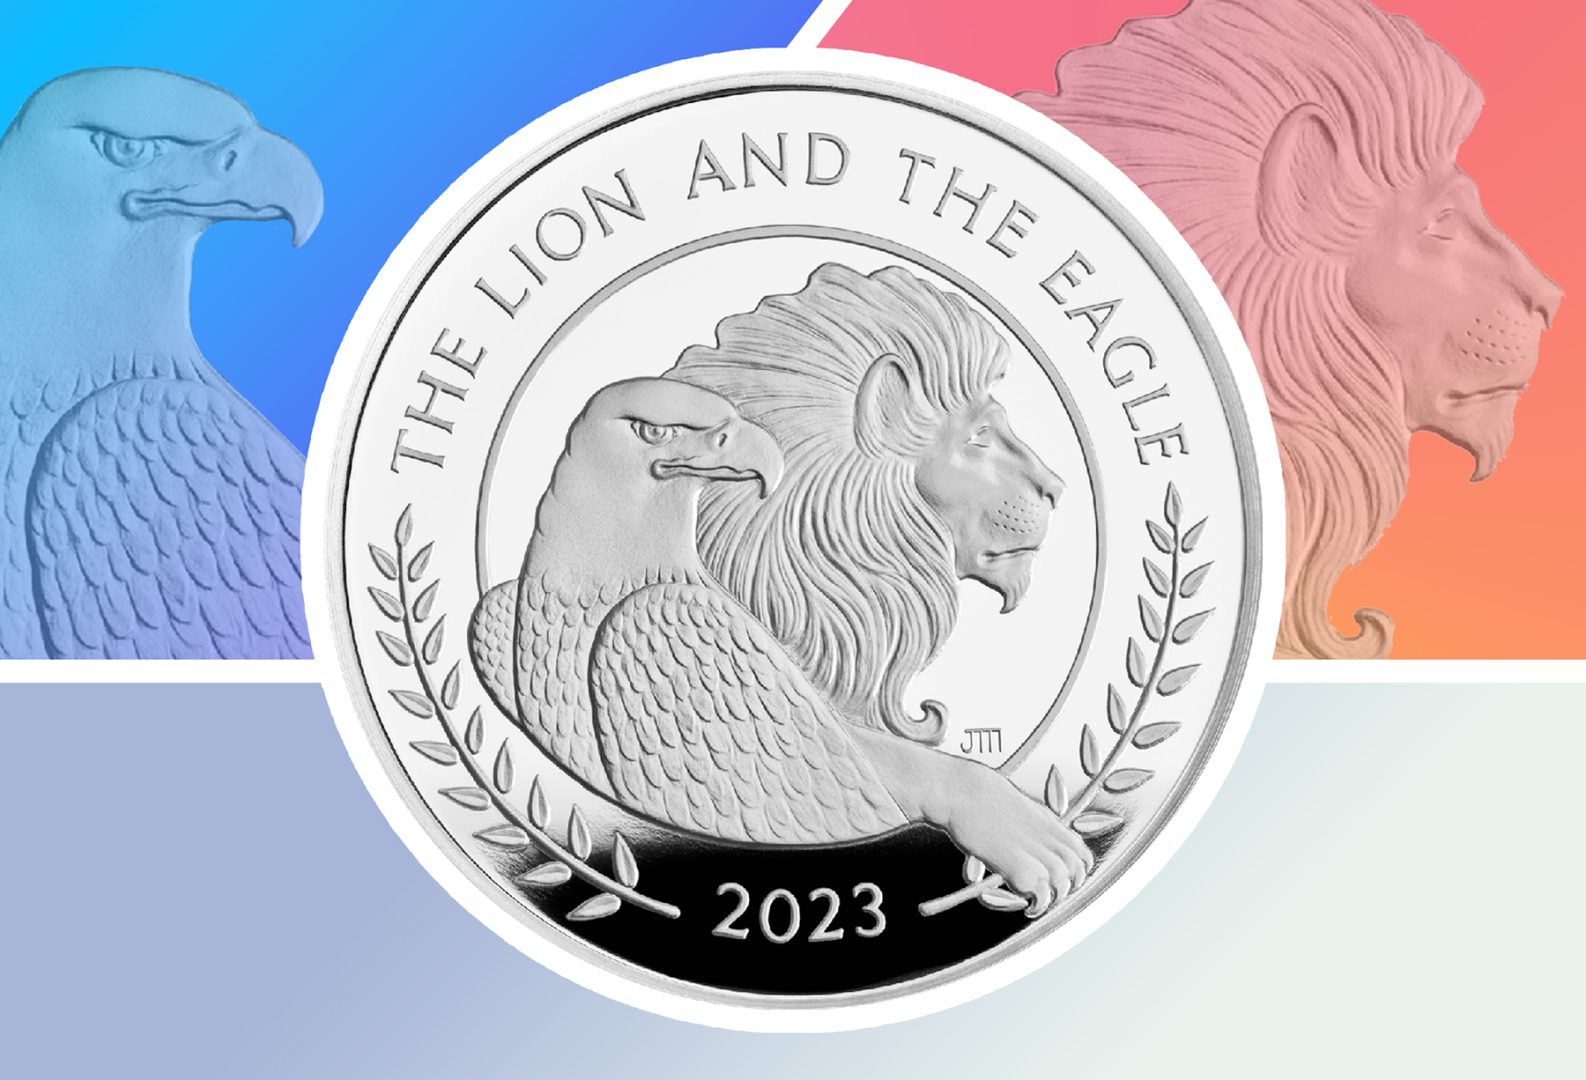 Mercanti’s Lion & Eagle Coin